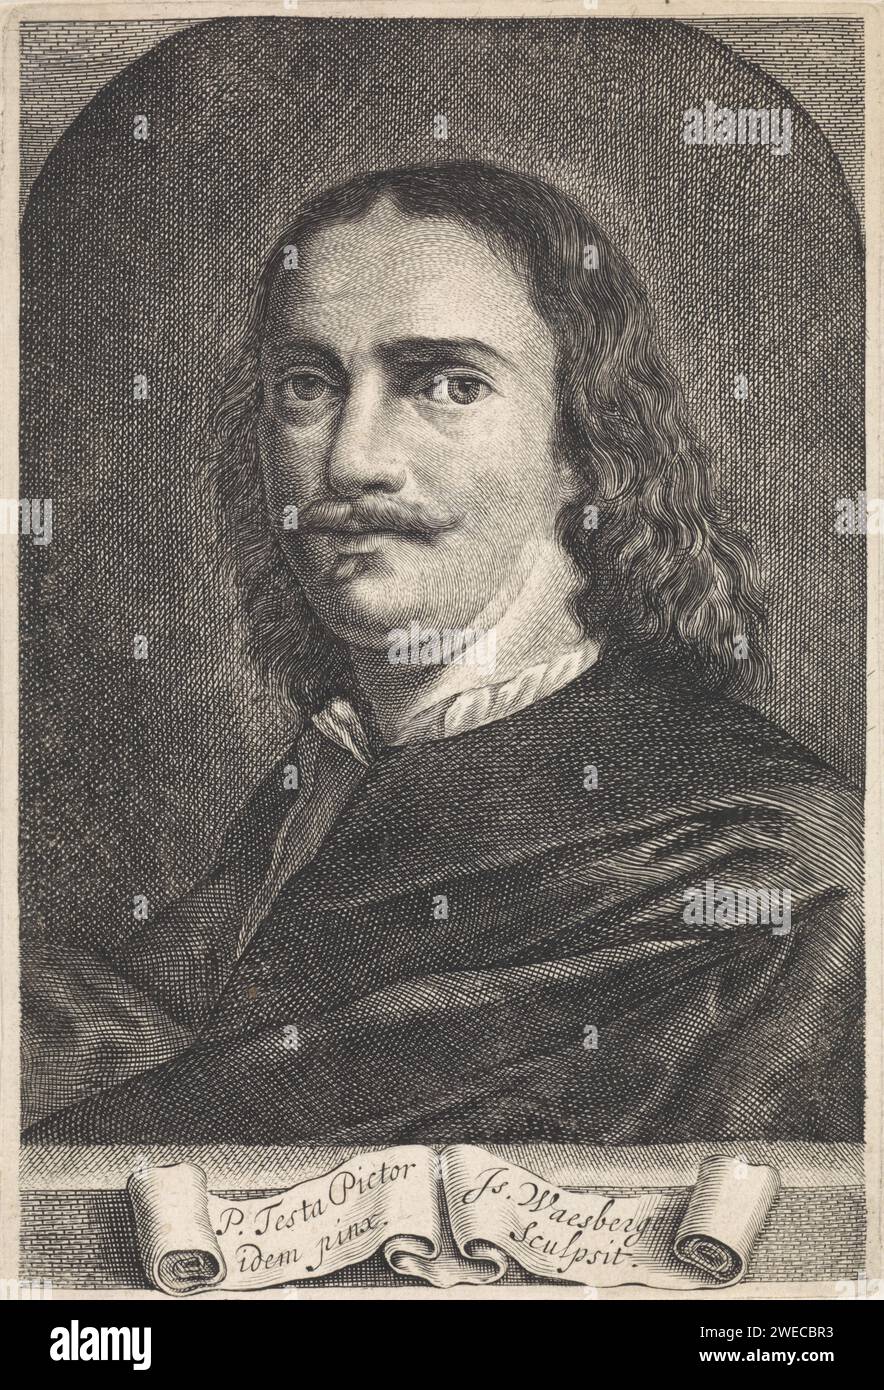 Portrait of the artist Pietro Testa, Isaac van Waesberge, After Pietro Testa, 1643 - 1657 print  The Hague paper engraving Stock Photo